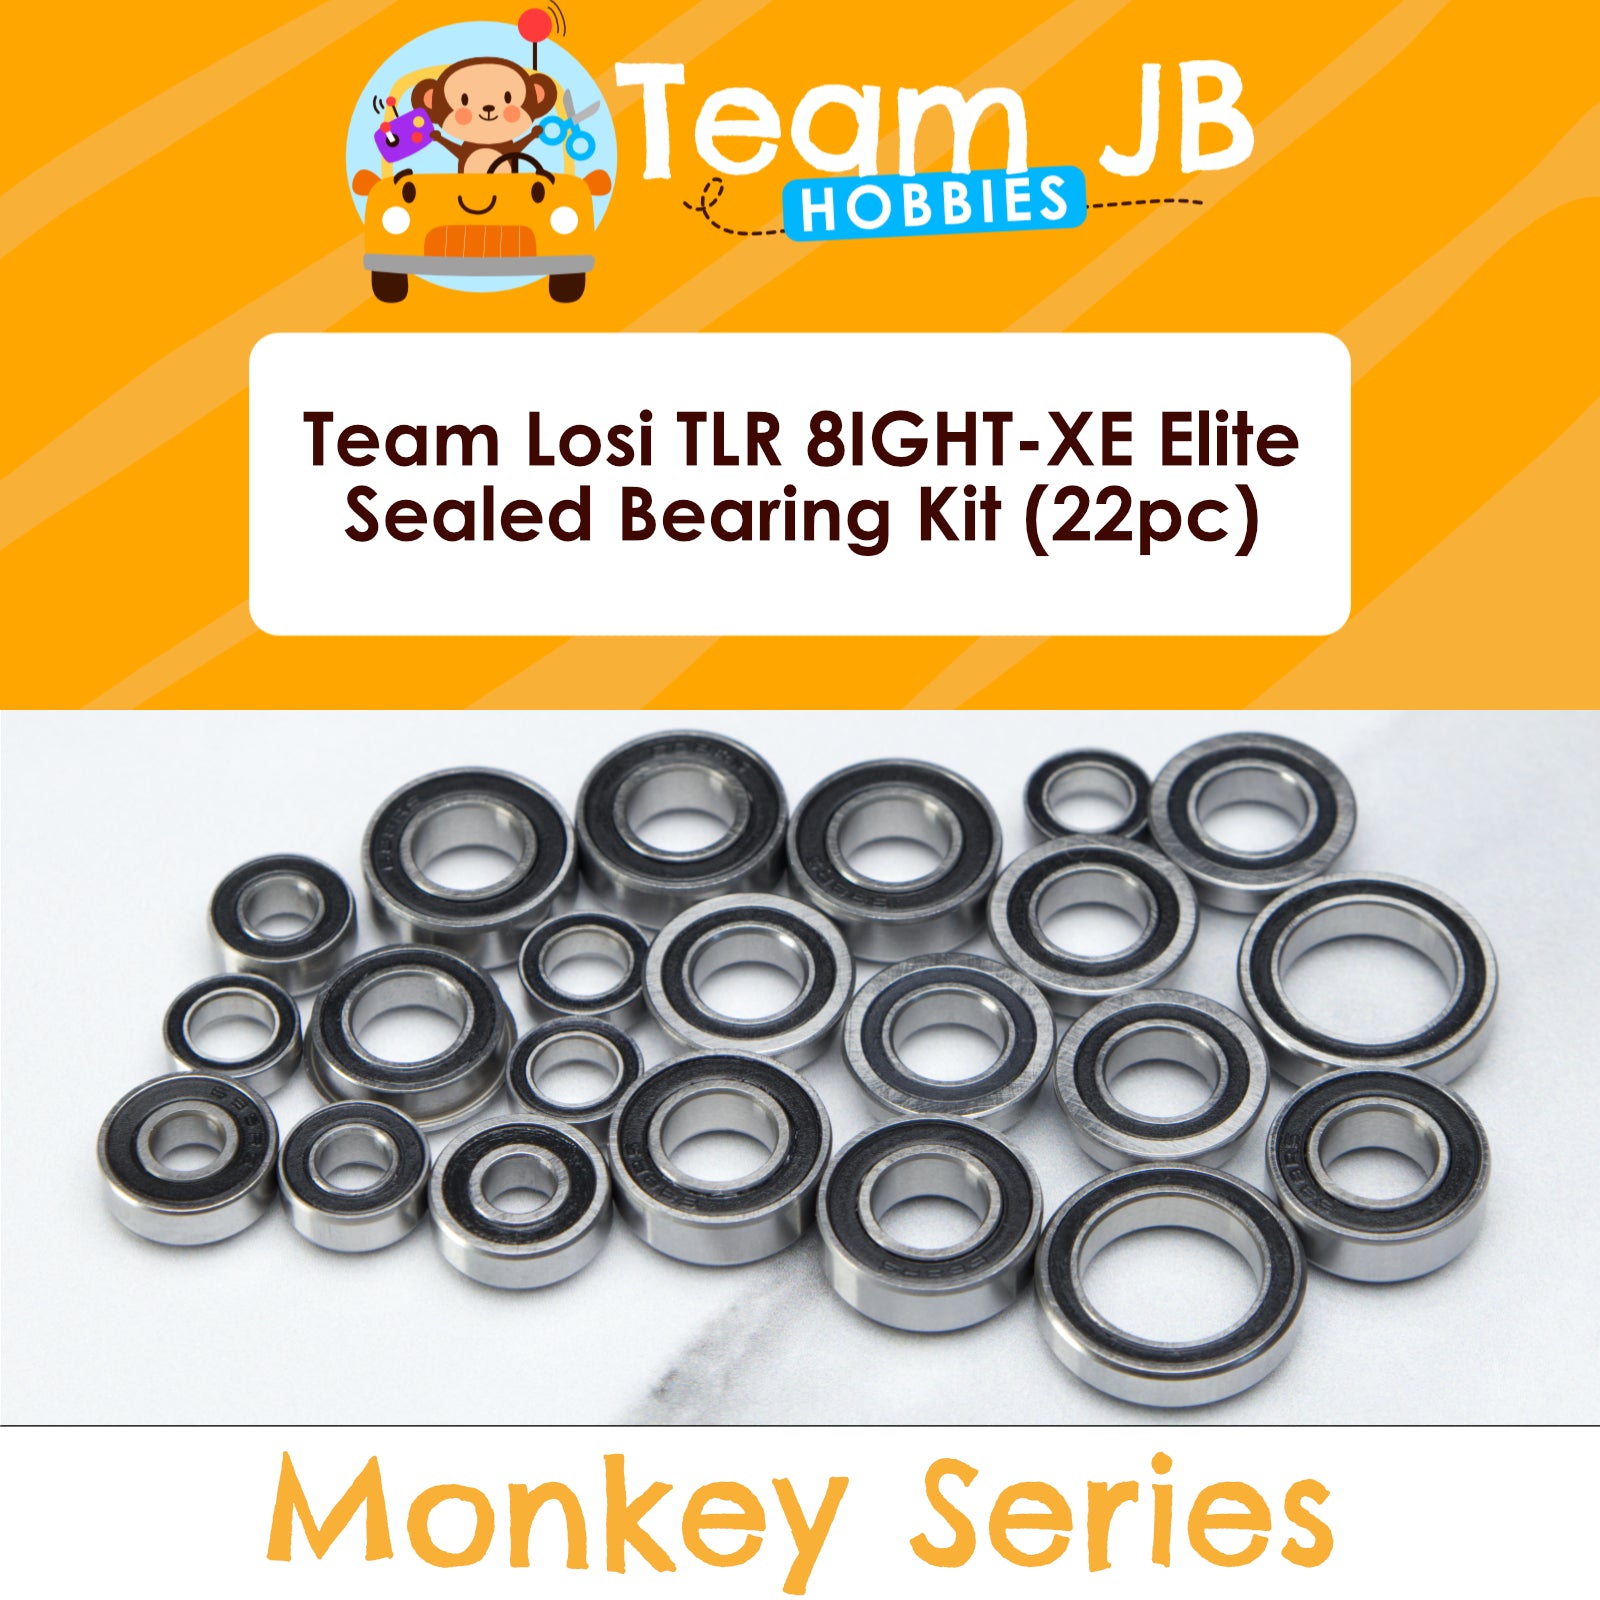 Team Losi TLR 8IGHT-XE Elite - Sealed Bearing Kit